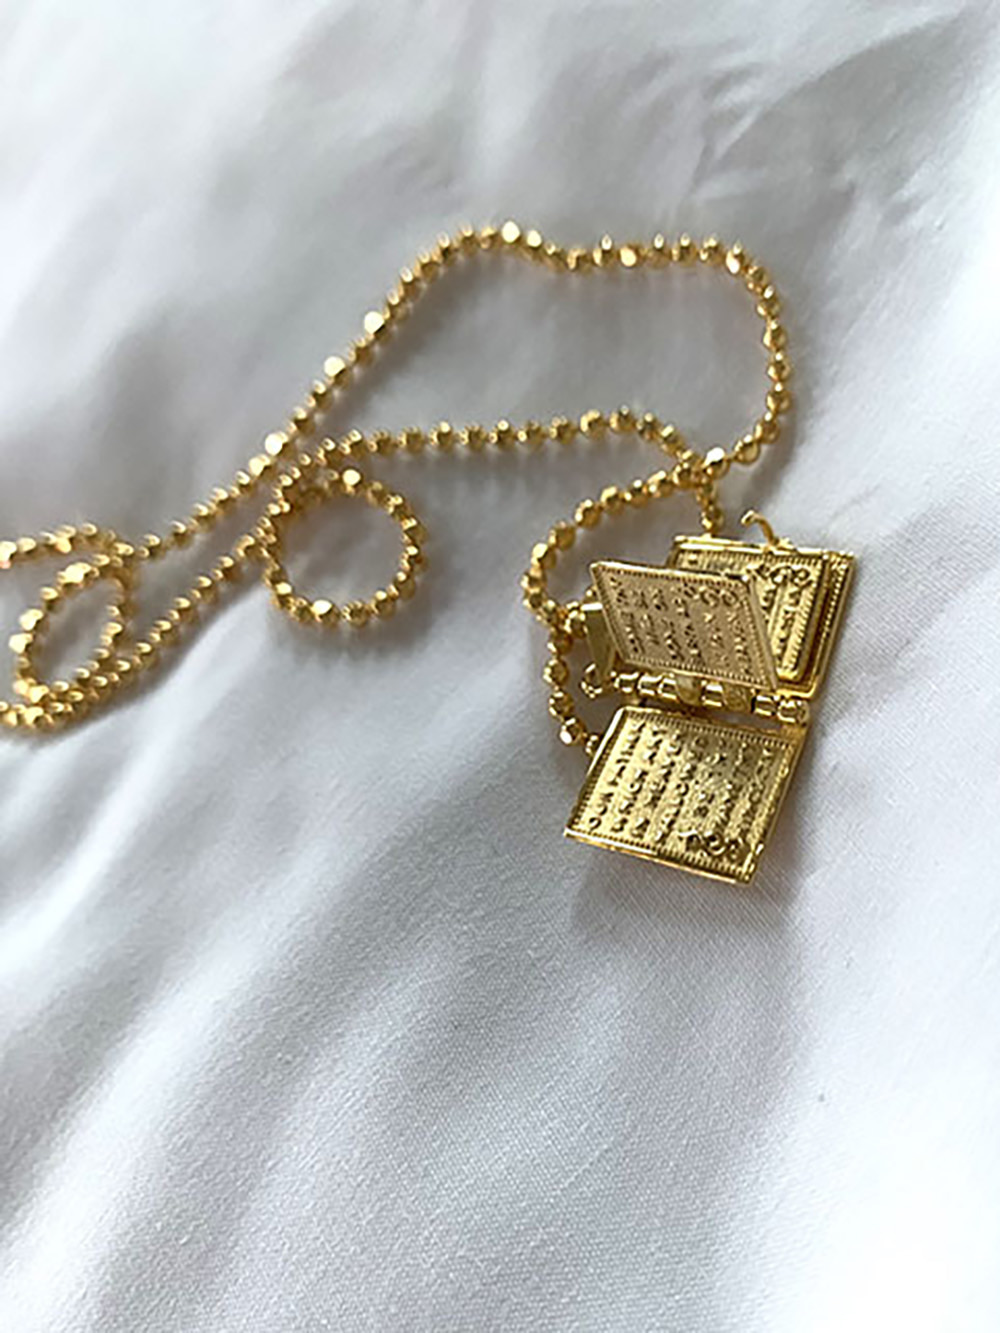 [92.5 silver] open book necklace